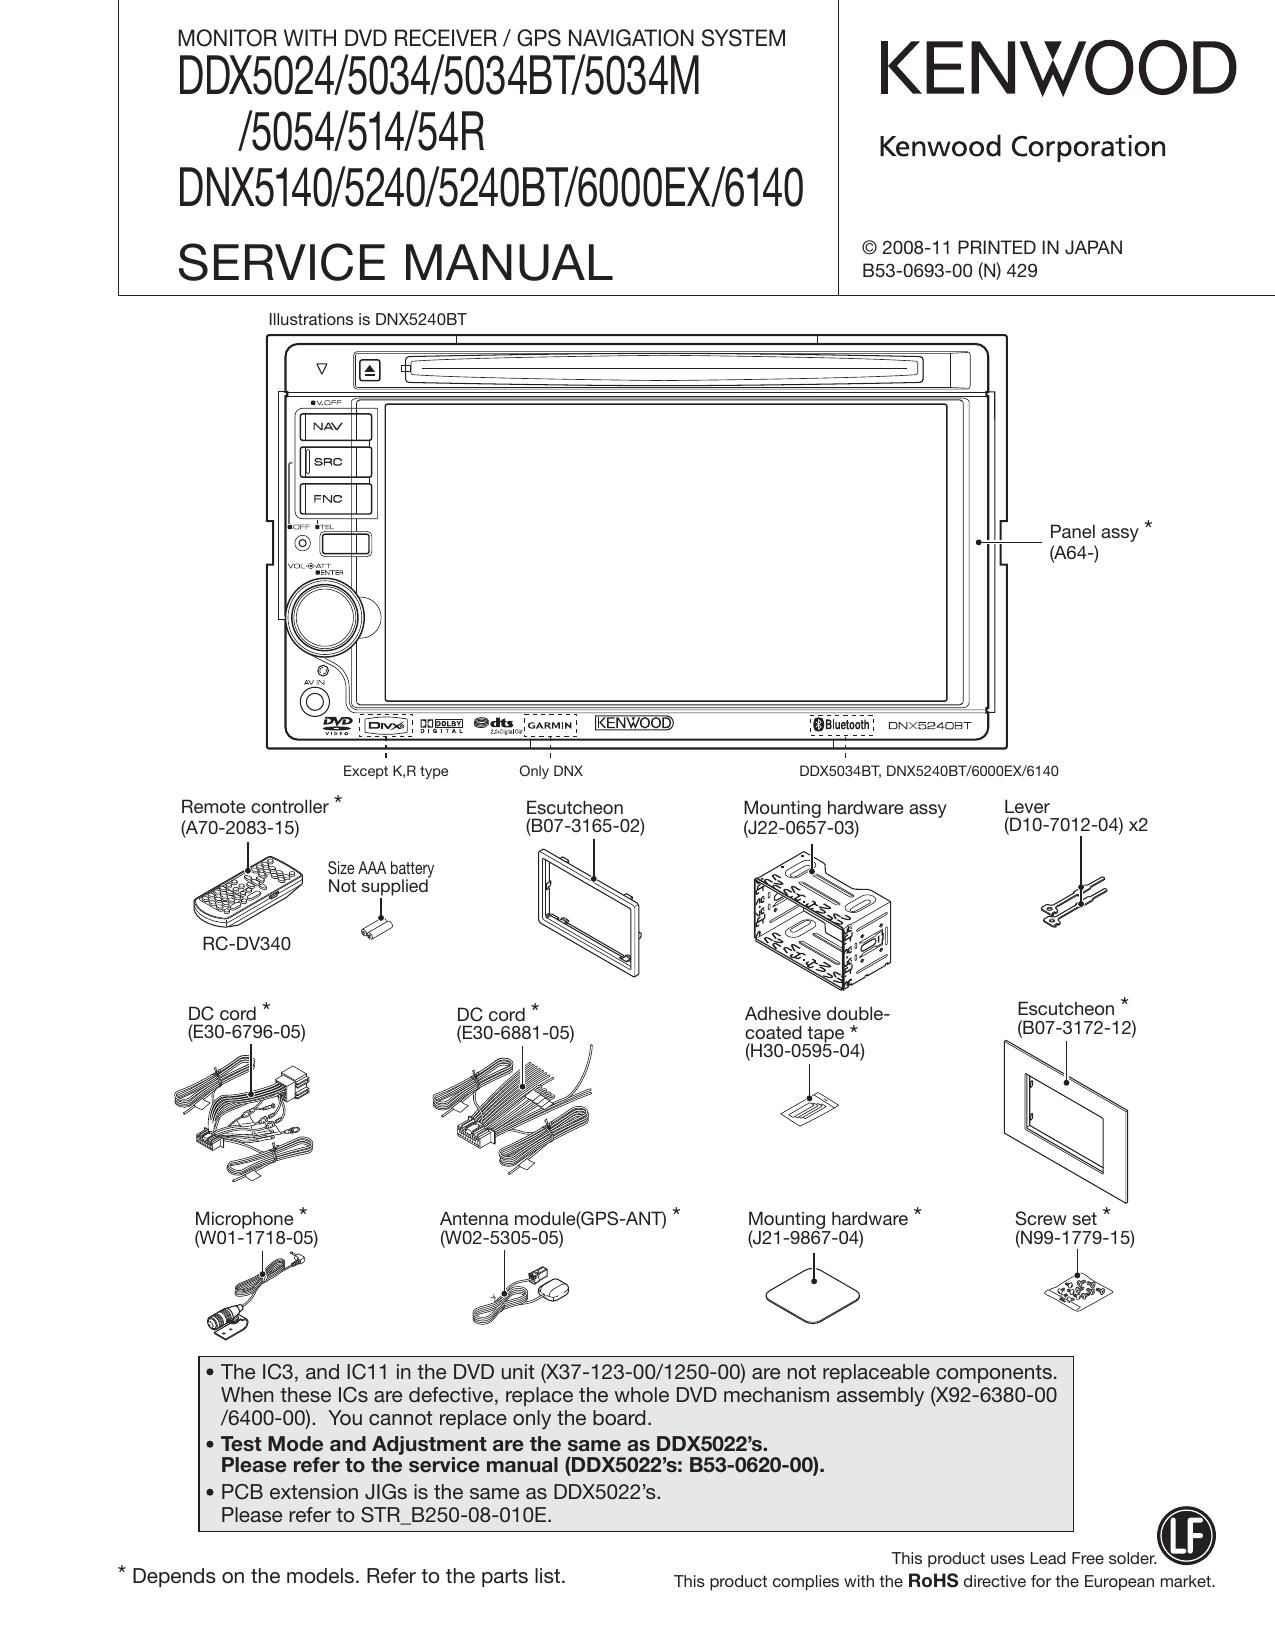 Kenwood DNX 6140 Service Manual